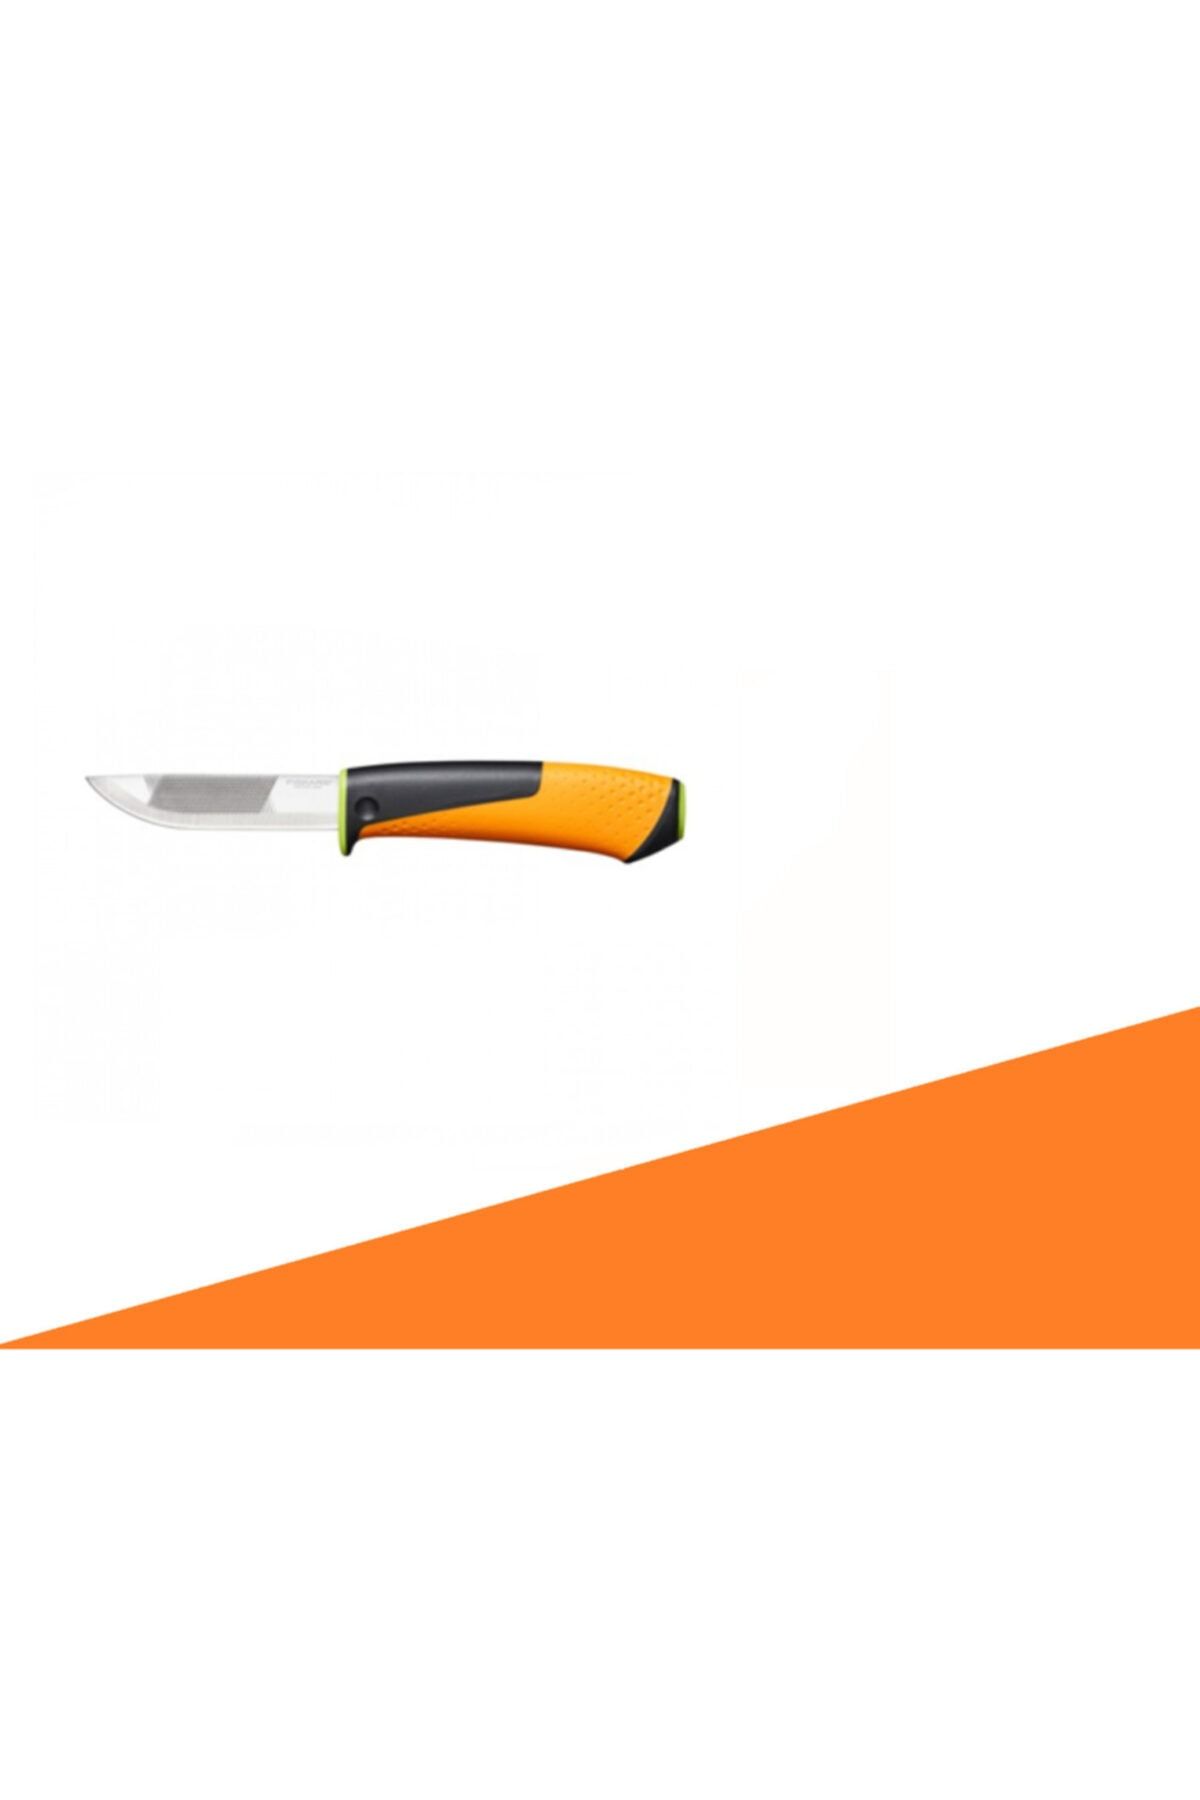 FiSKARS Fıskars genel Kullanım Bıçağı (zor Iş Bıçağı) 156018-1023